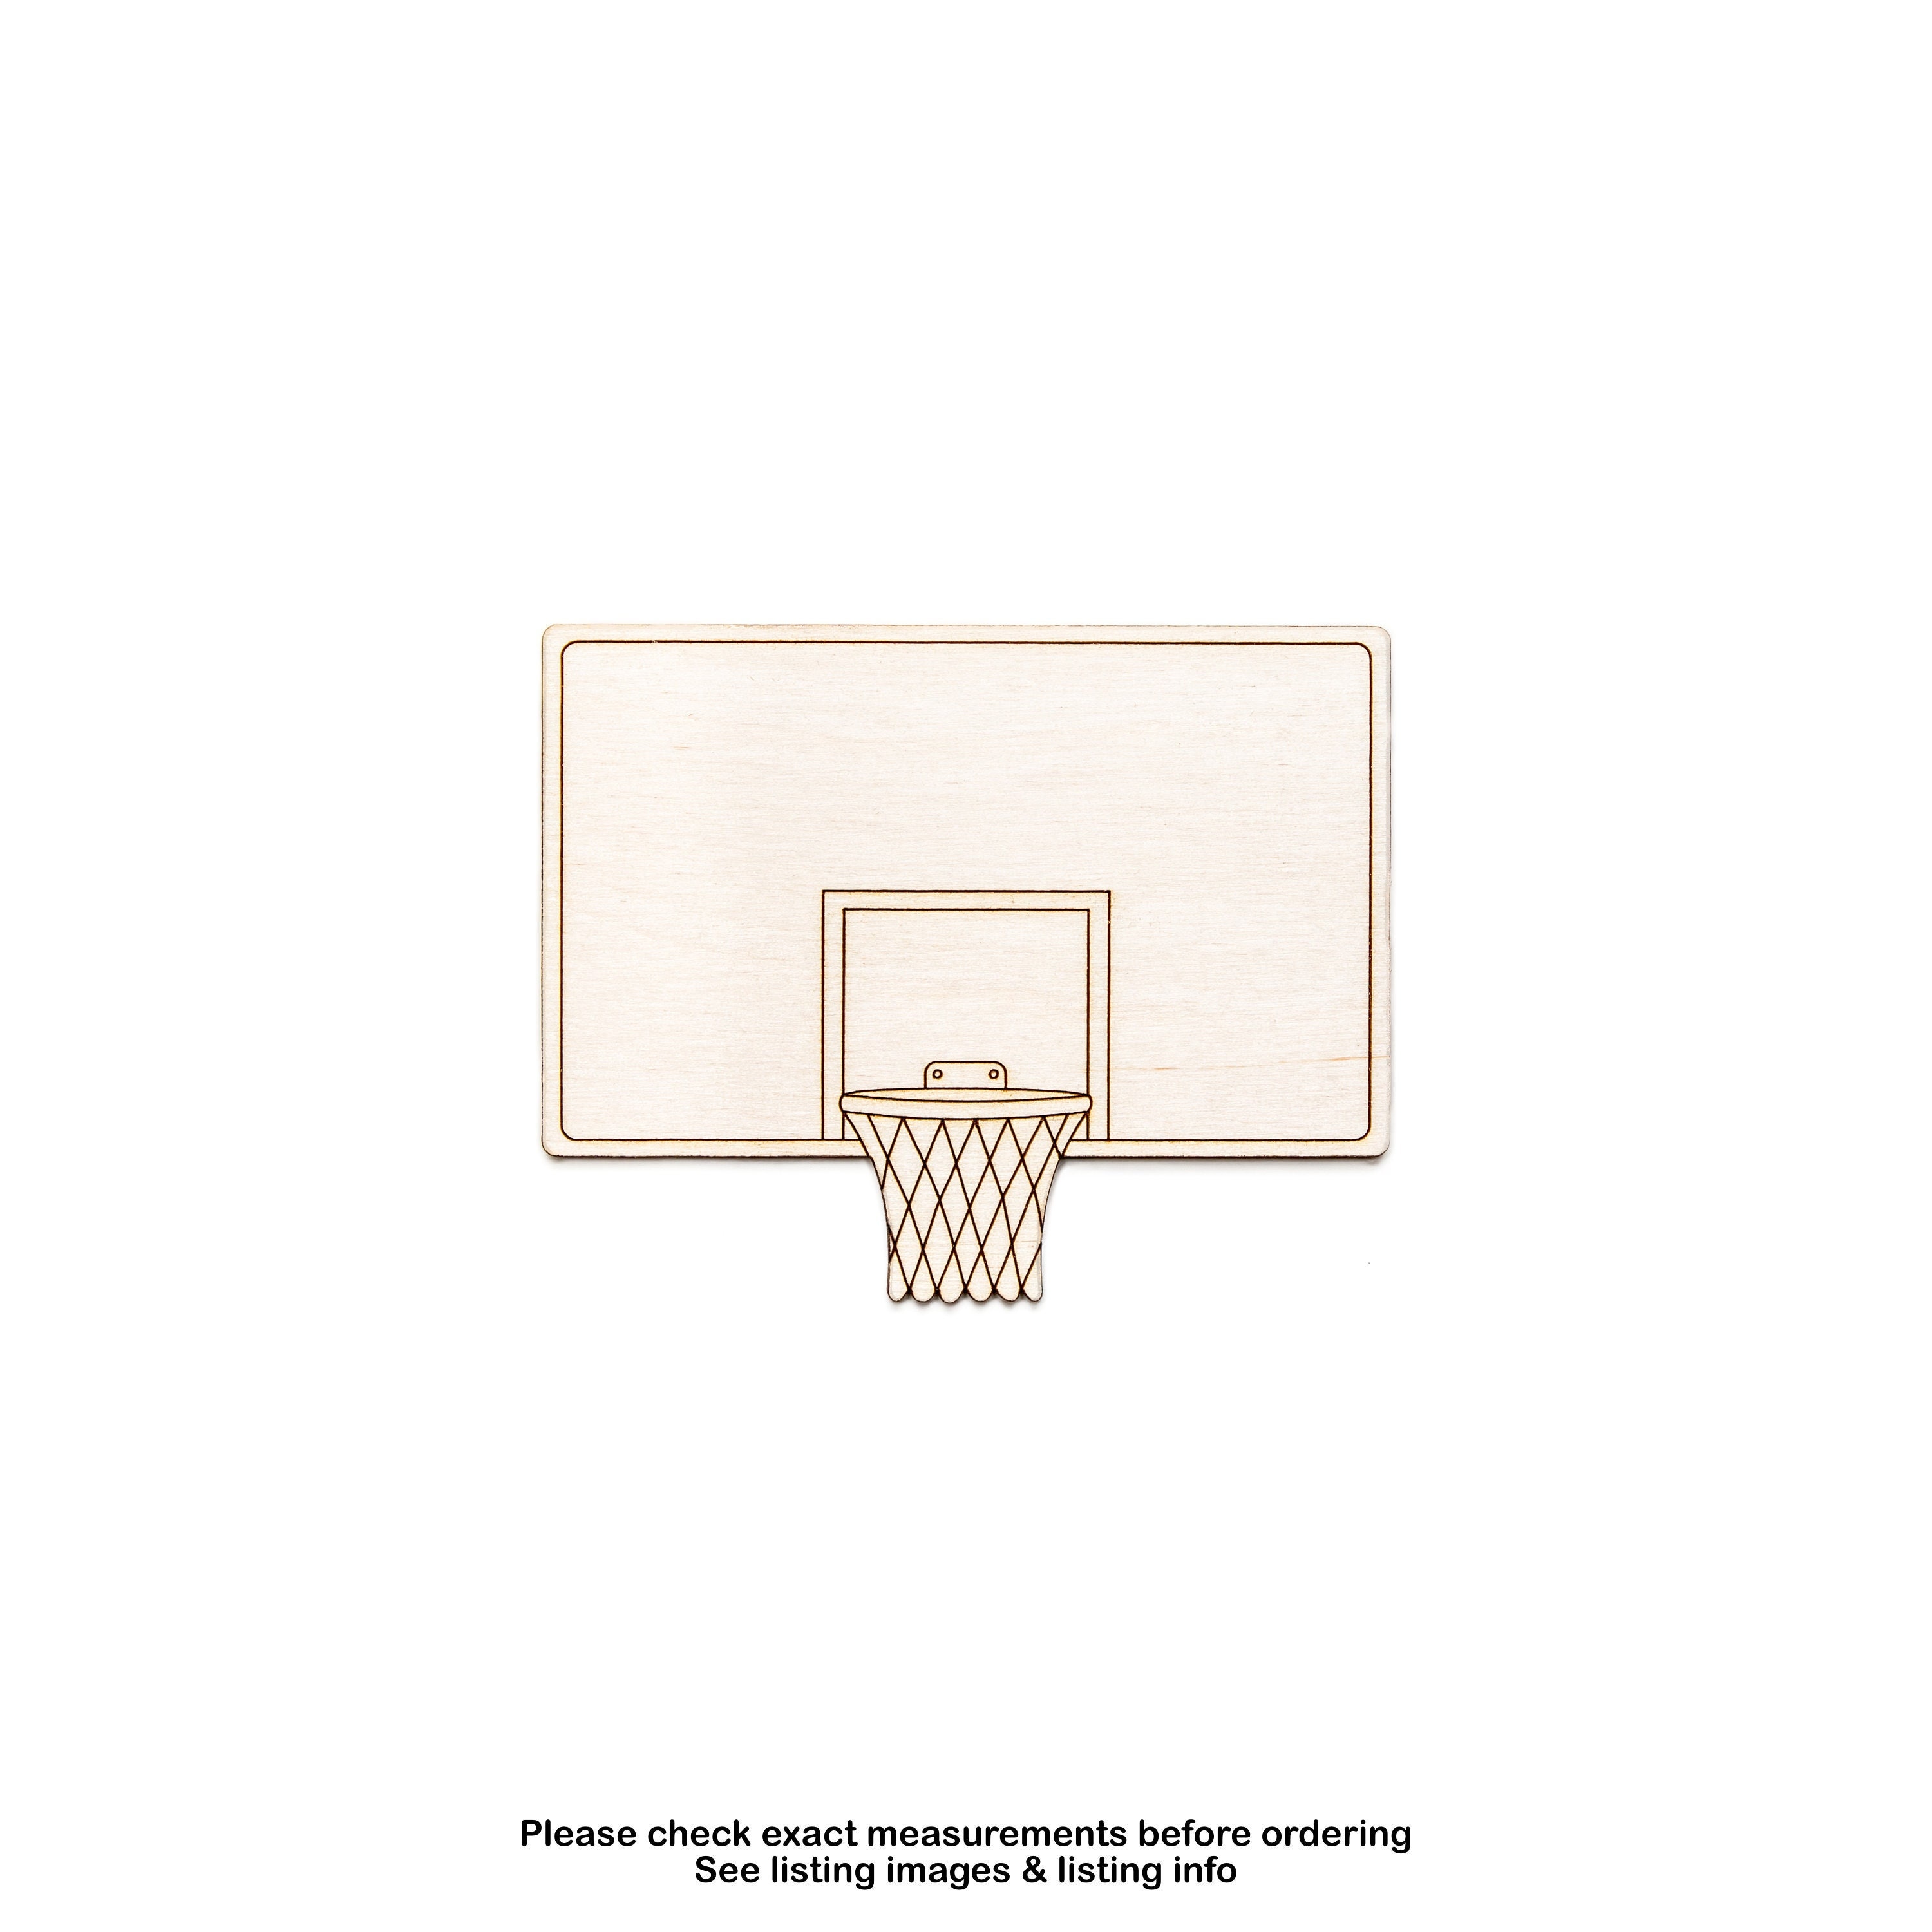 Basketball Rims & Nets Dimensions & Drawings